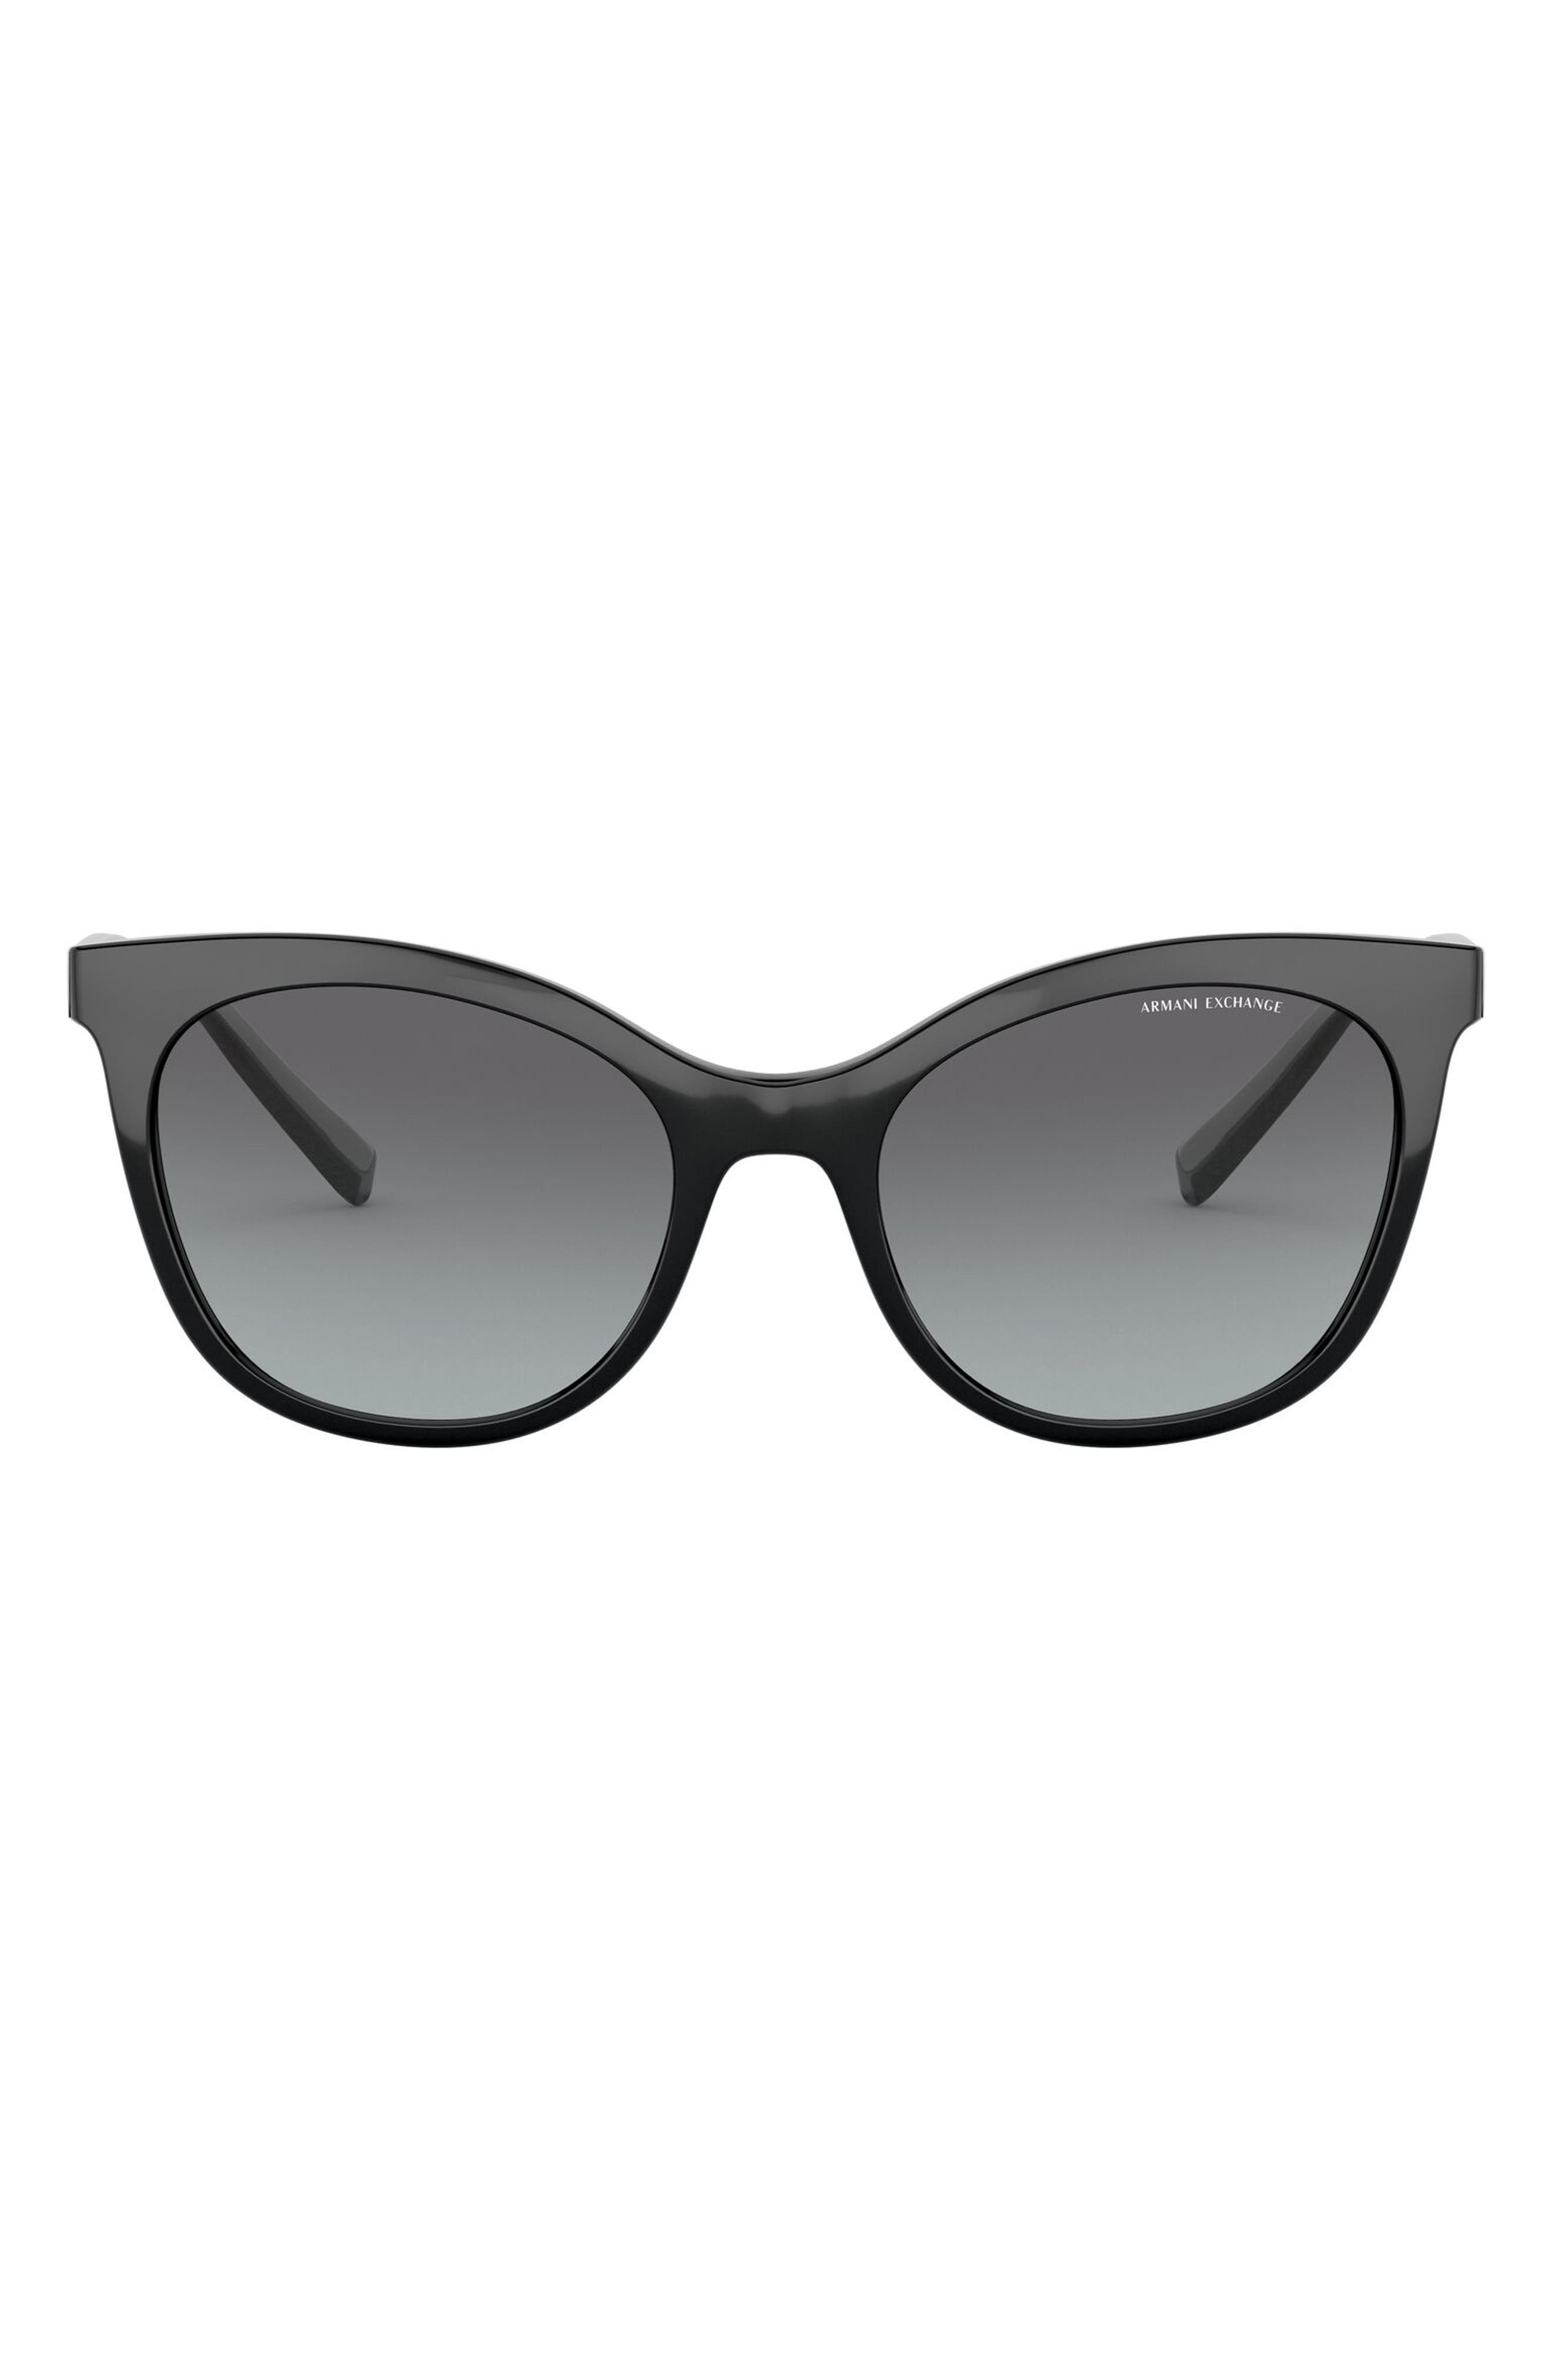 EAN 7895653185302 product image for Men's Ax Armani Exchange 54mm Gradient Cat Eye Sunglasses - Black | upcitemdb.com